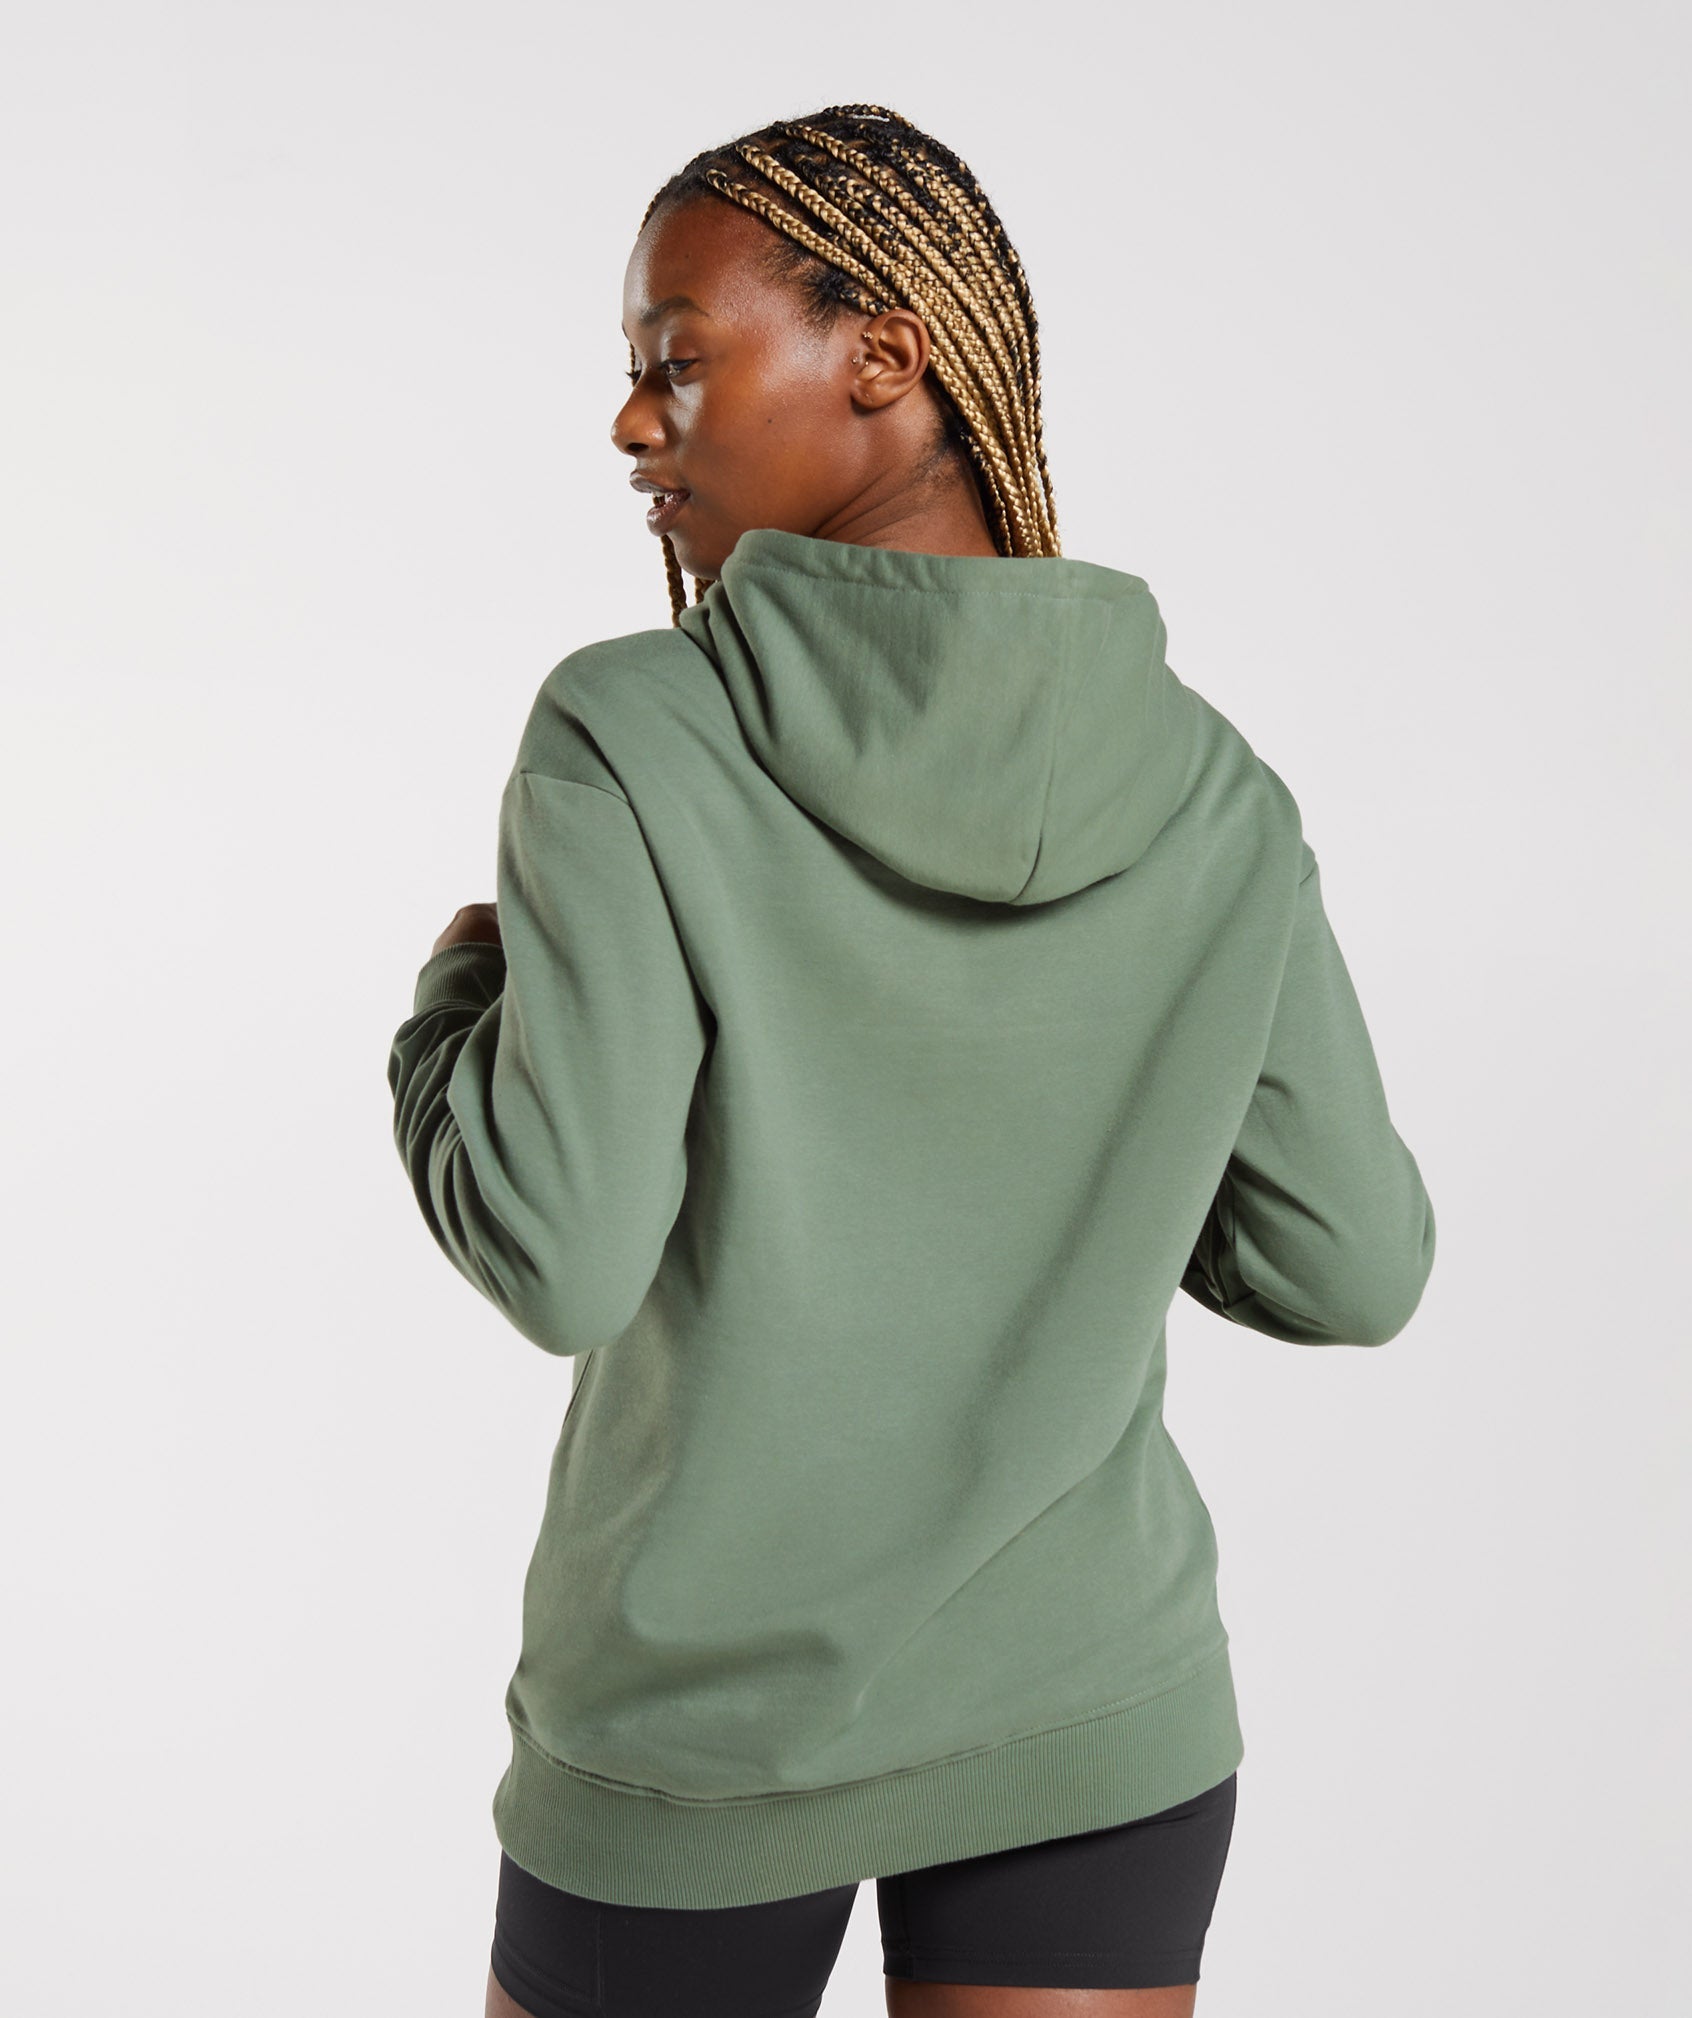 Oversized hoodie - Khaki green - Ladies